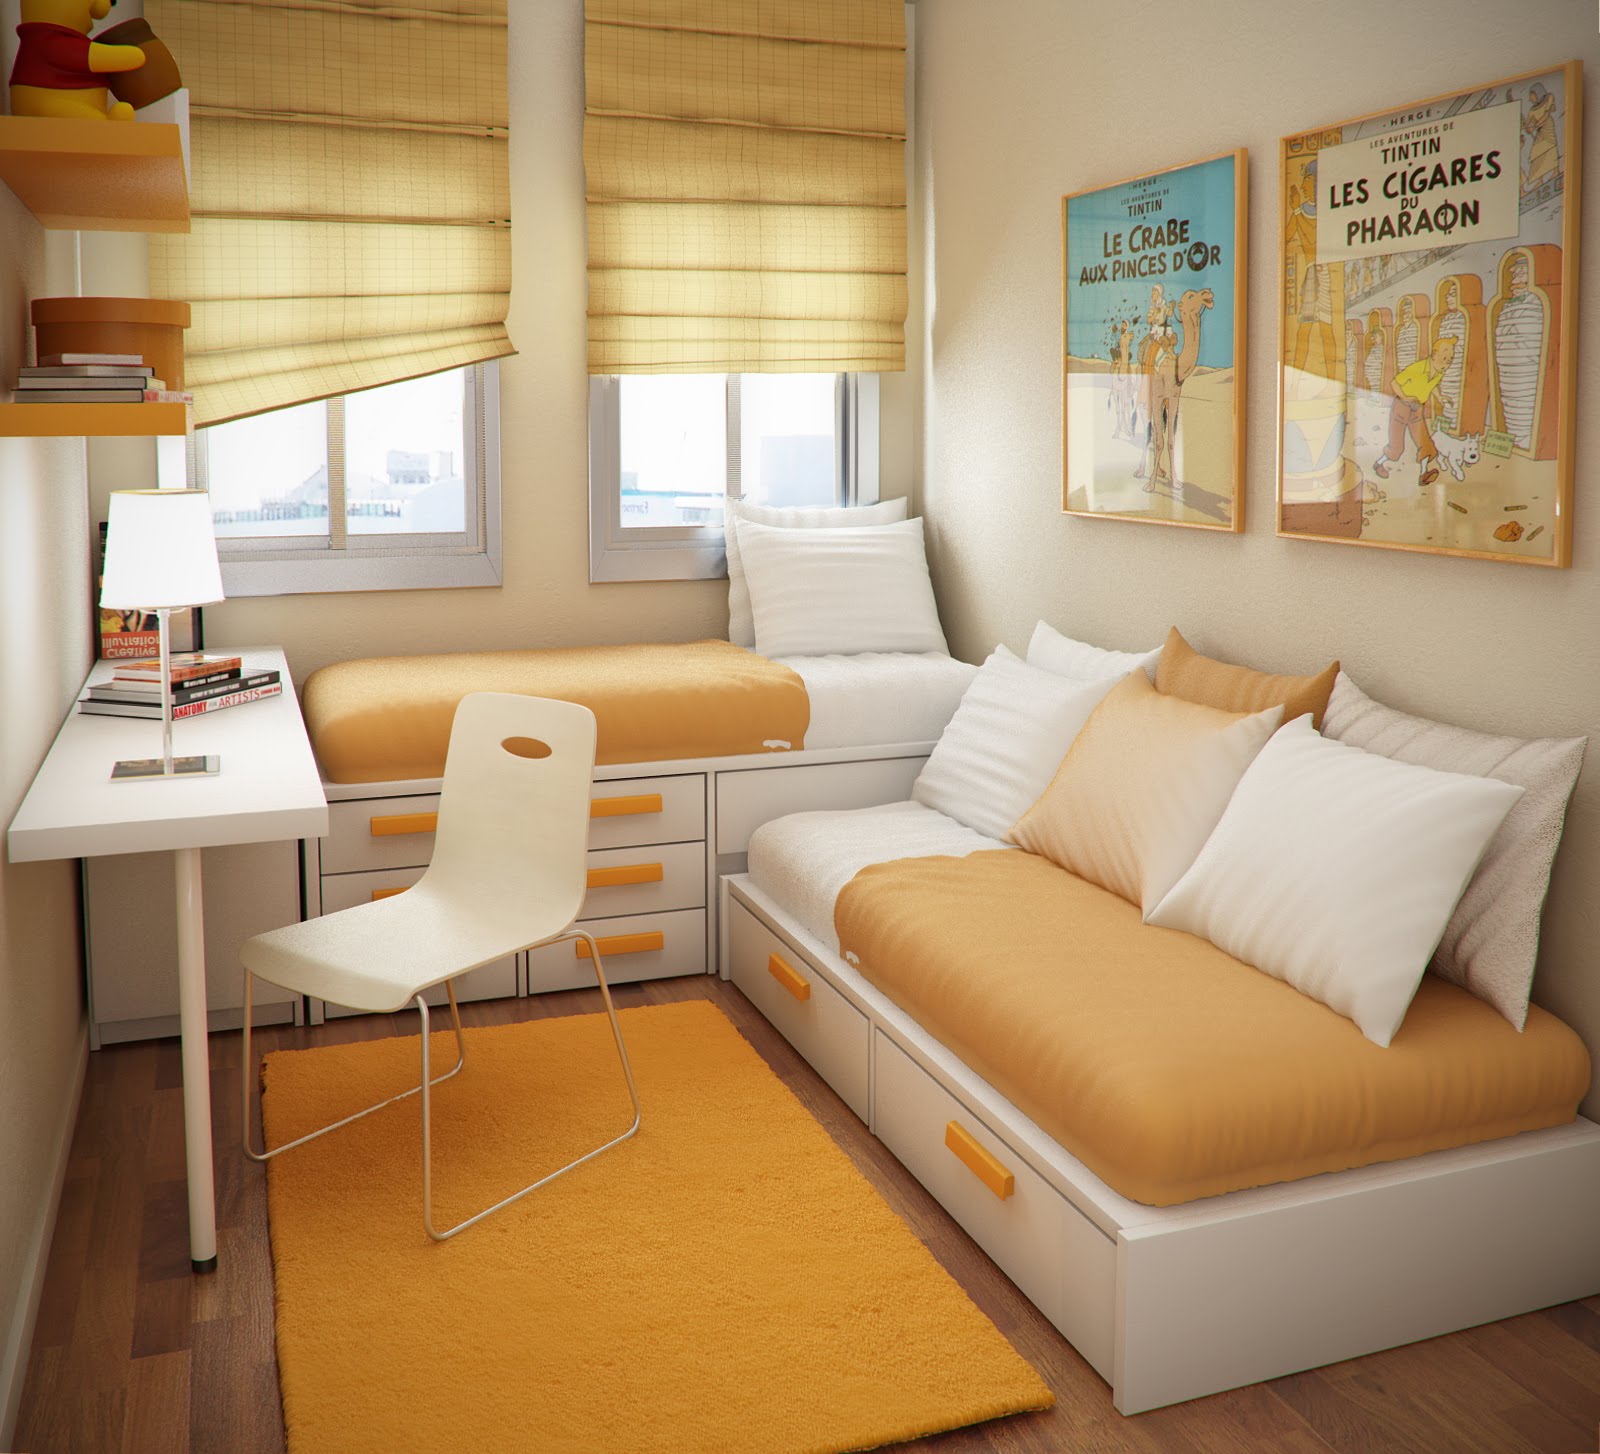 Home Decoration Design: Minimalist Interior Design Ideas for Small Bedroom